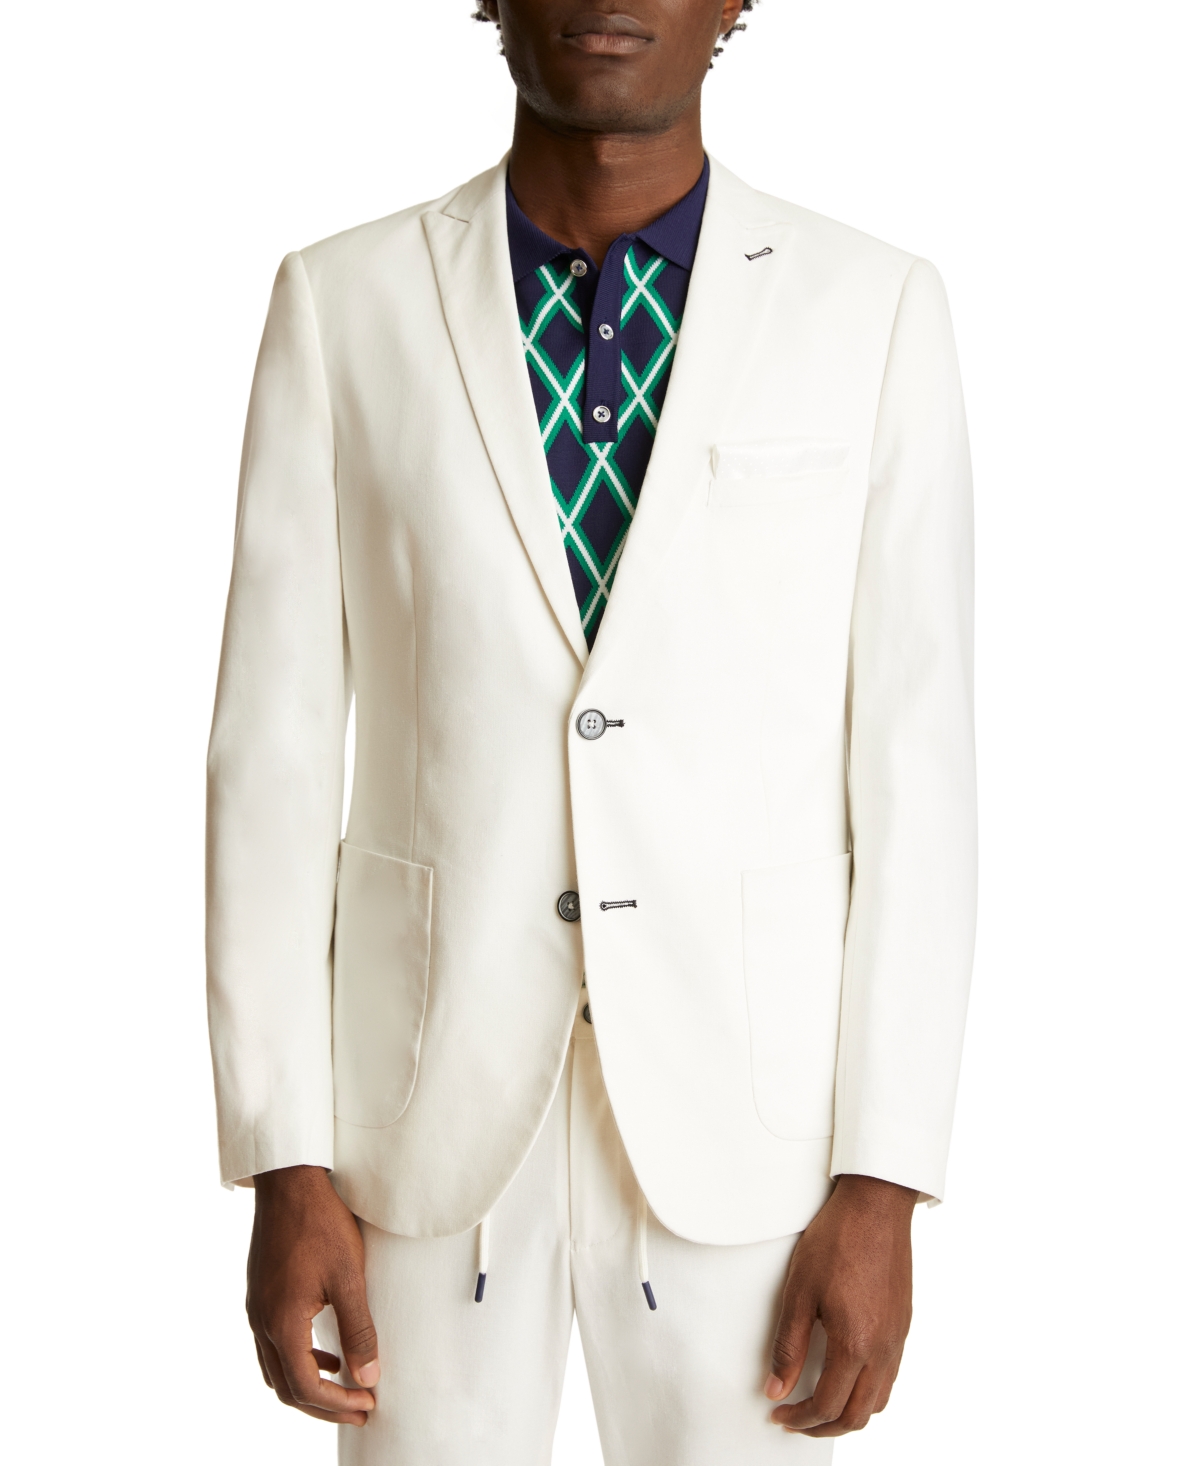 Paisley & Gray Men's Slim-fit Suit Separates Jacket In White Linen